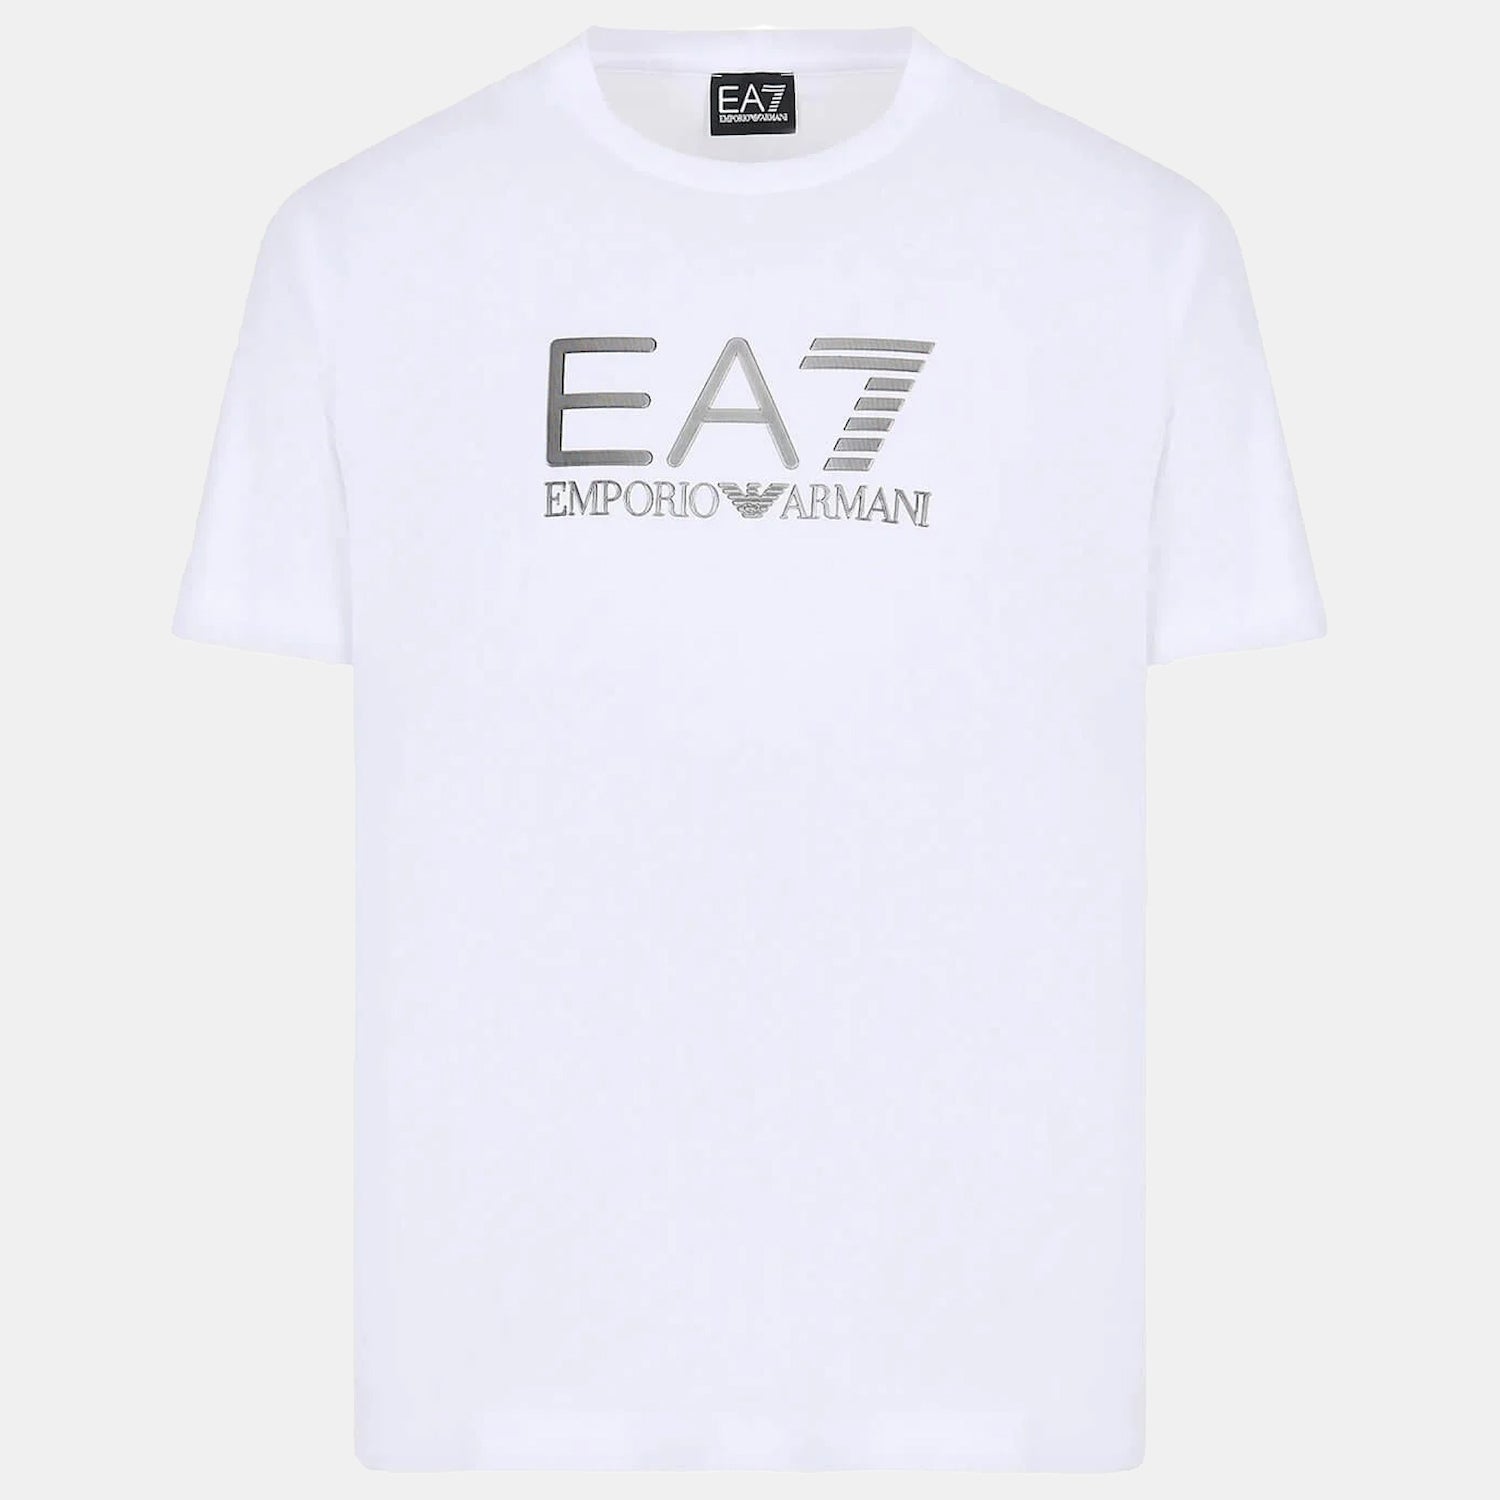 Emporio Armani Ea7 T Shirt 6rpt71 Pjm9z White Branco_shot4